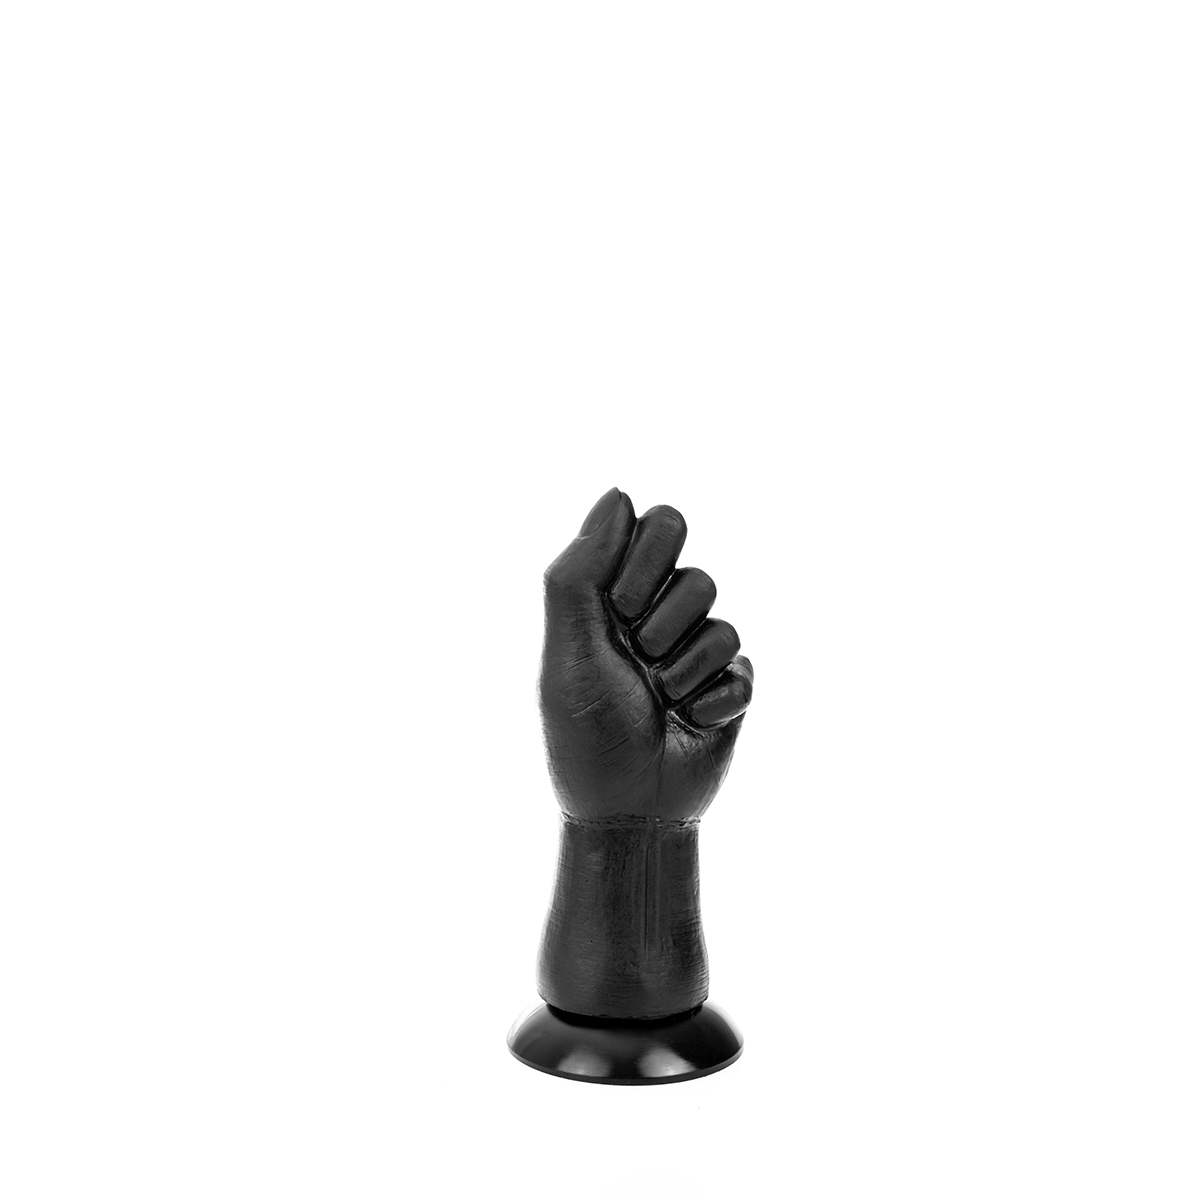 Dinoo King-Size – Cock Fist Small Black